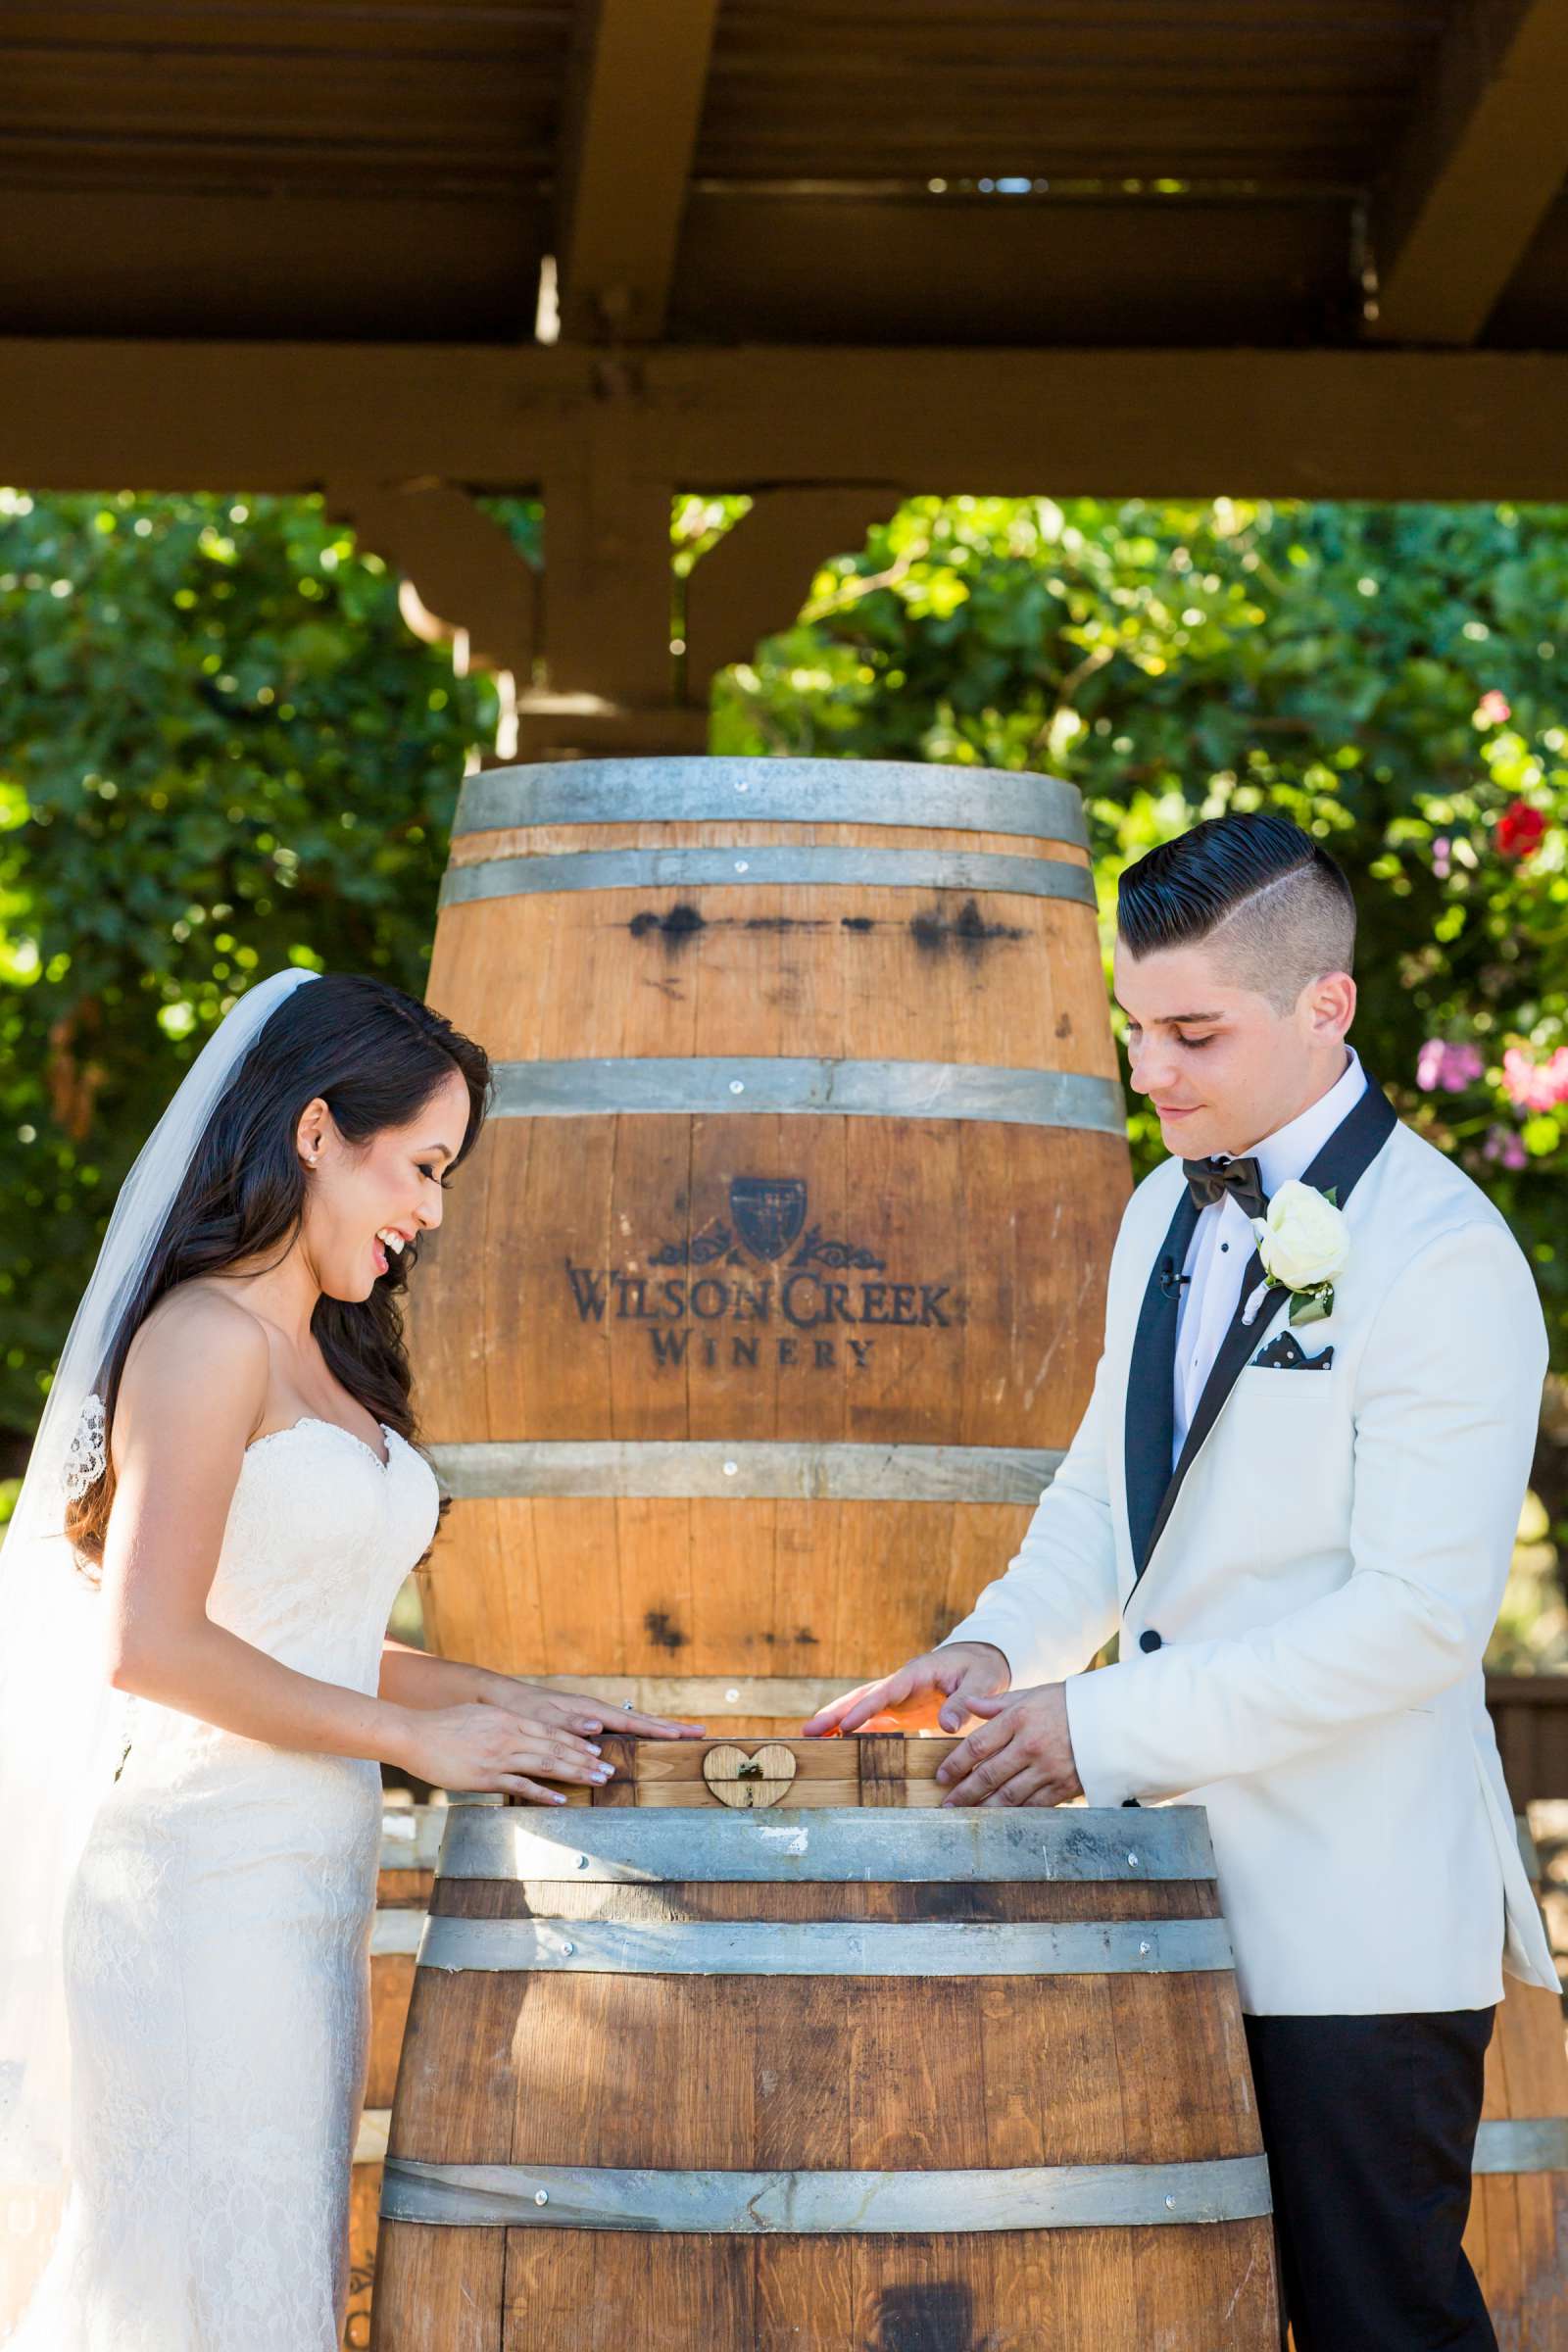 Wilson Creek Winery Wedding, Quynhnhi and Jacob Wedding Photo #60 by True Photography